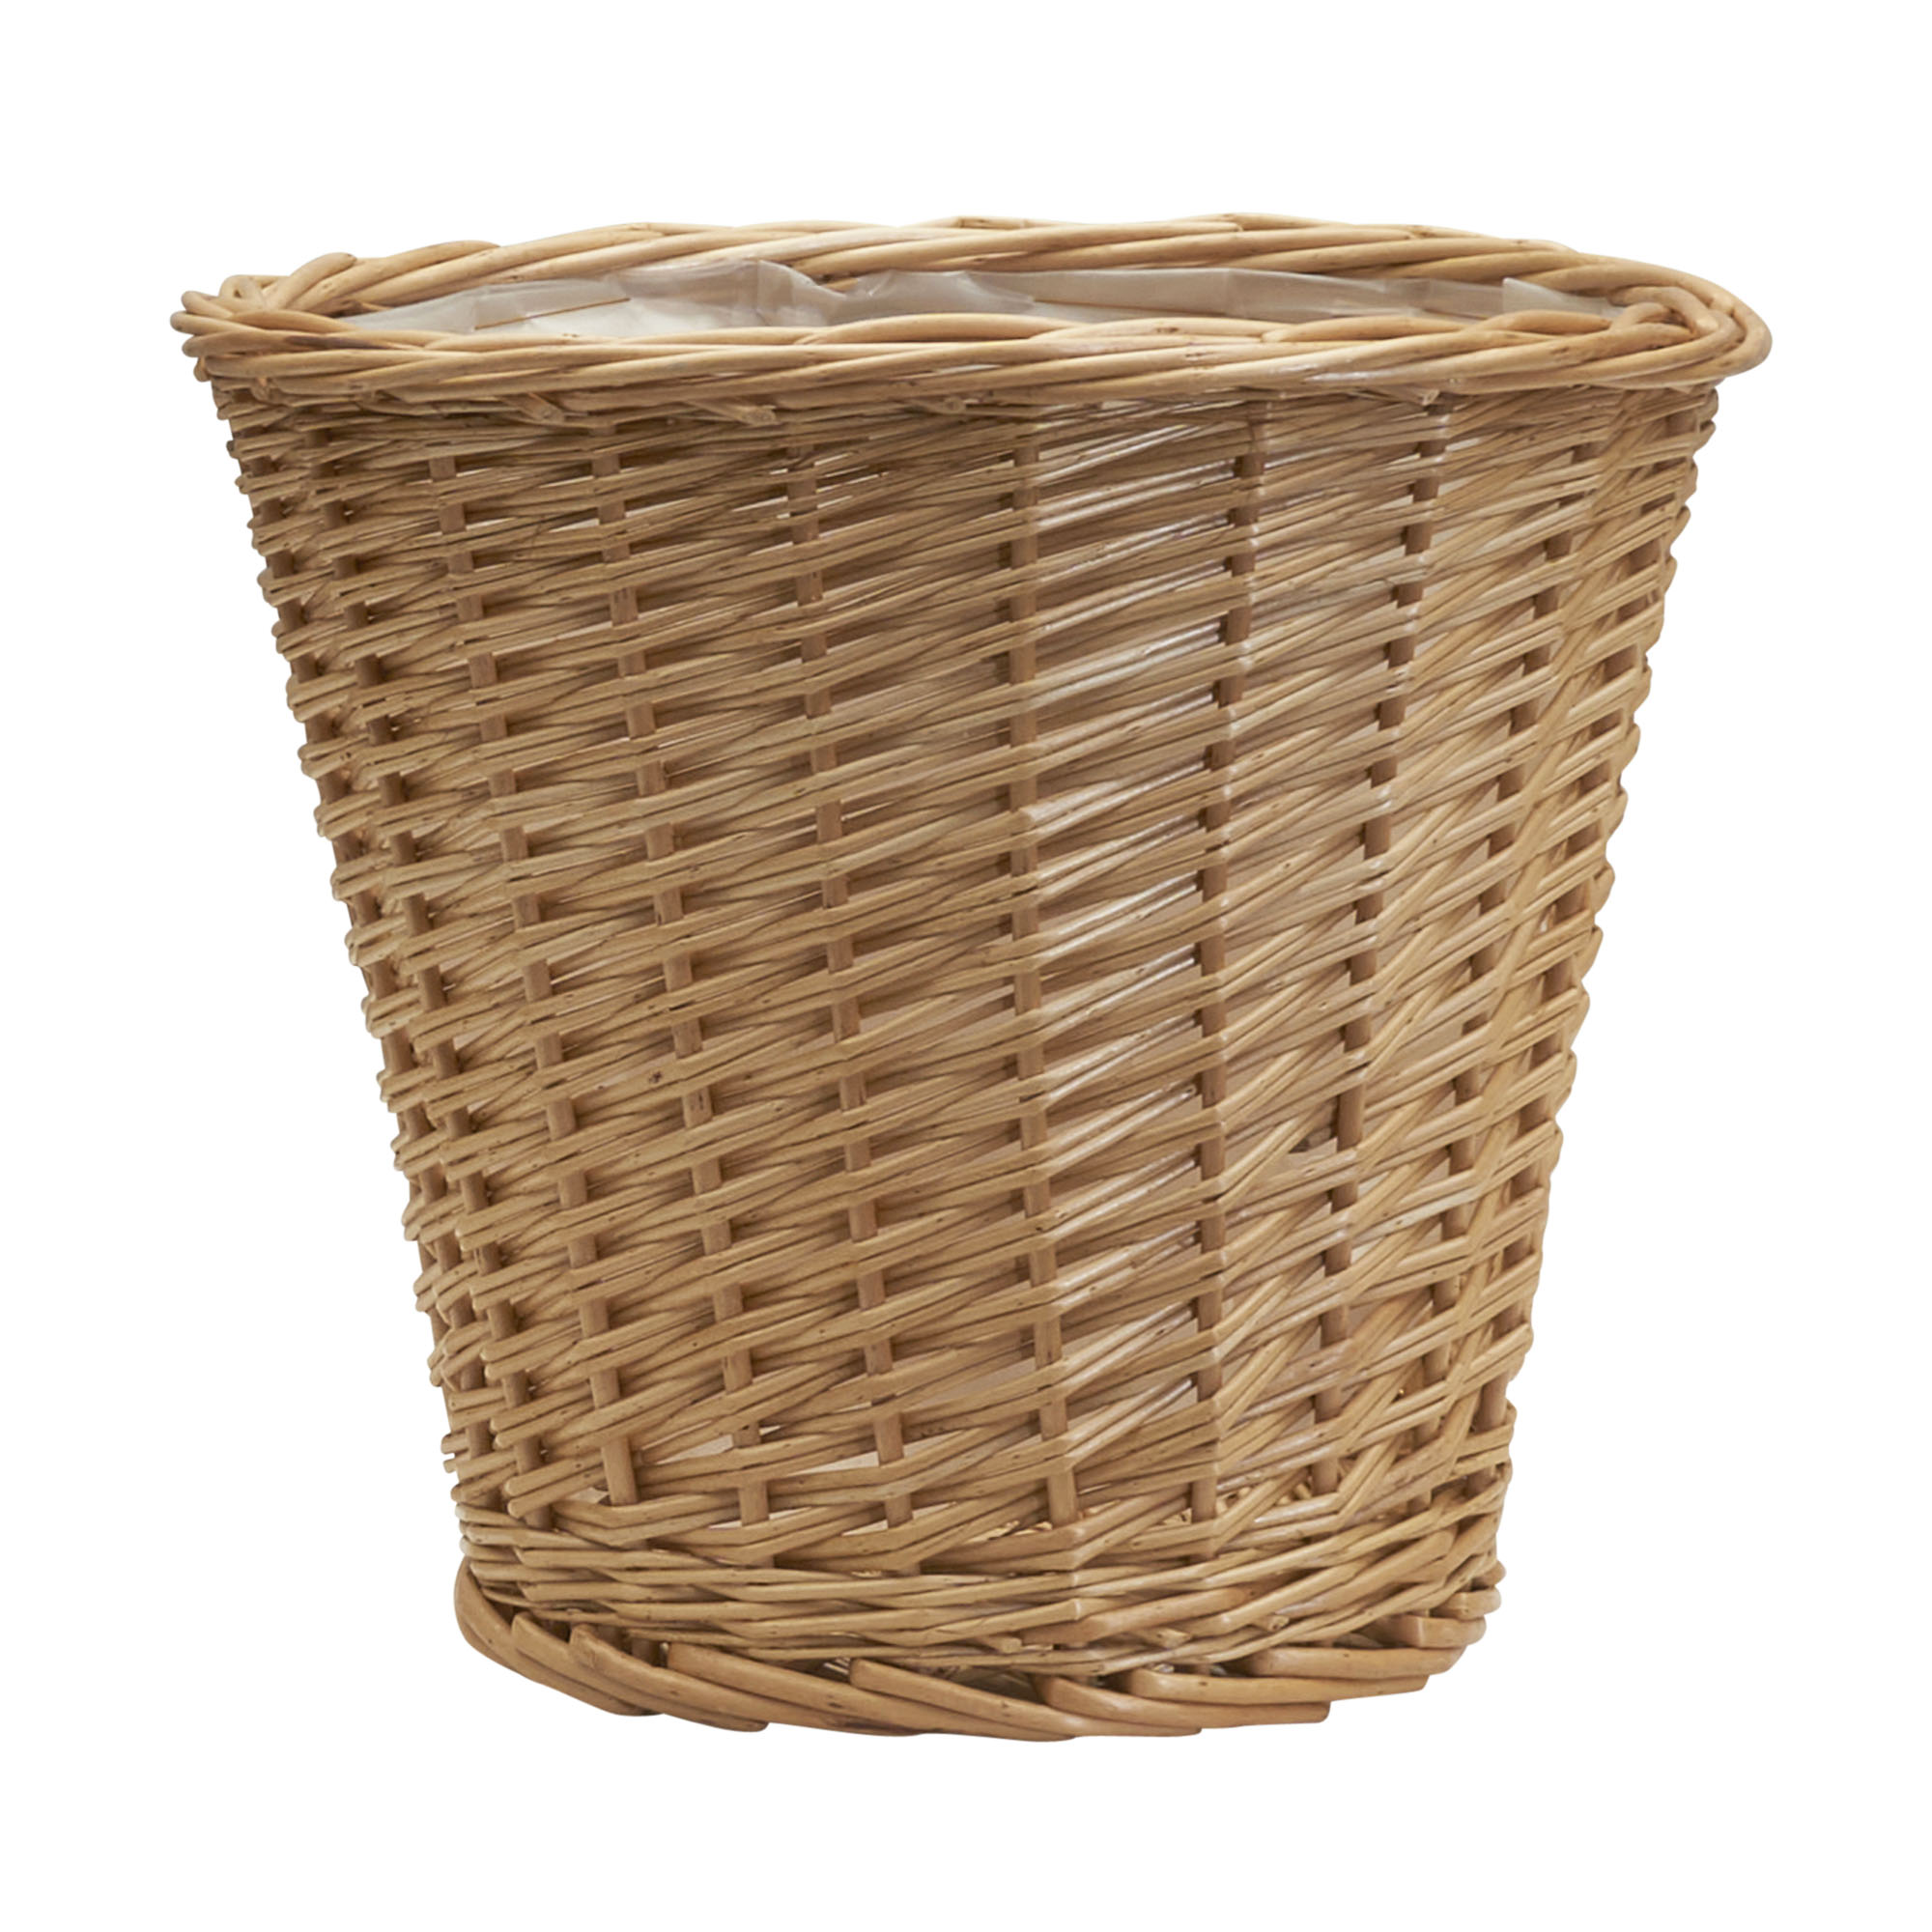 Household Essentials Medium Willow Waste Basket - image 1 of 5